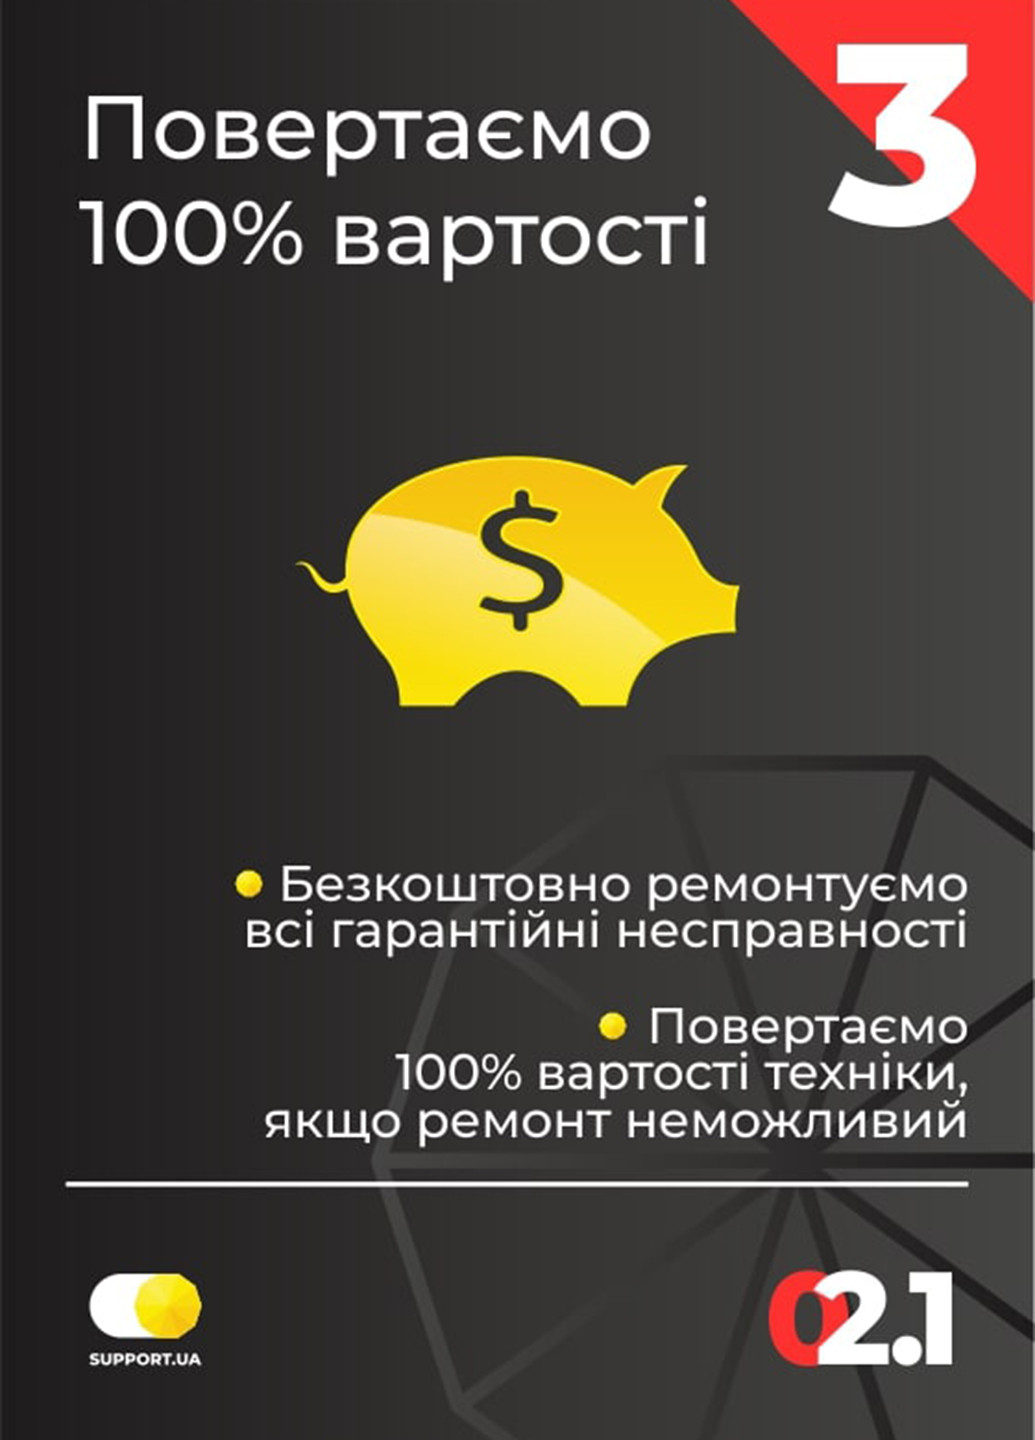 +2 года гарантии (1001-2000), Электронный сертификат от Support.ua